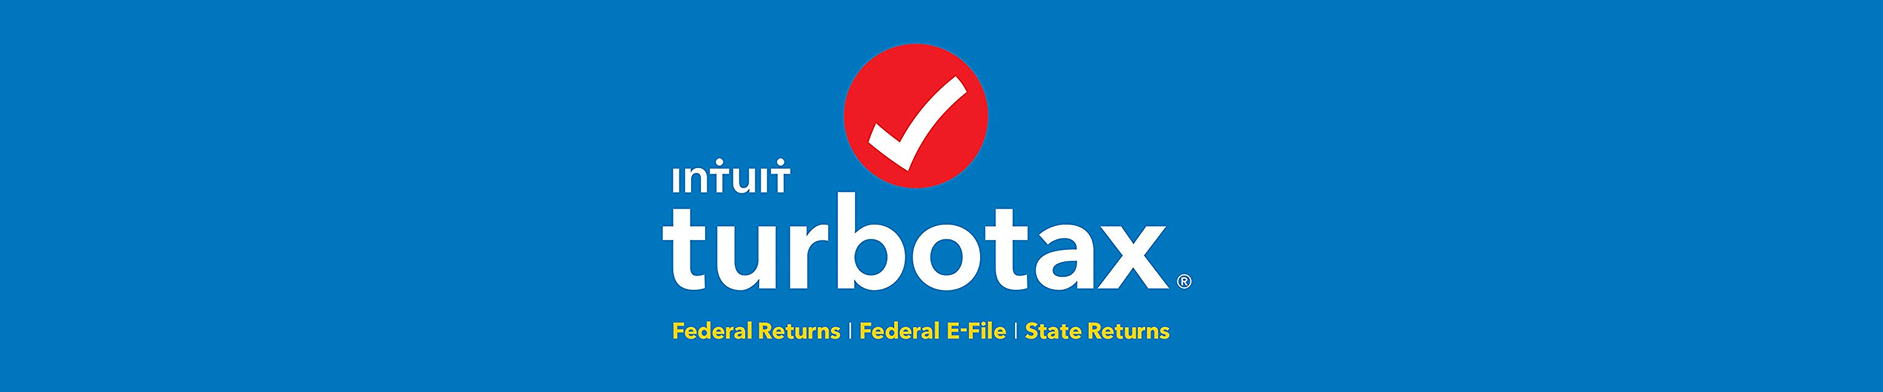 turbotax coupon codes 2021